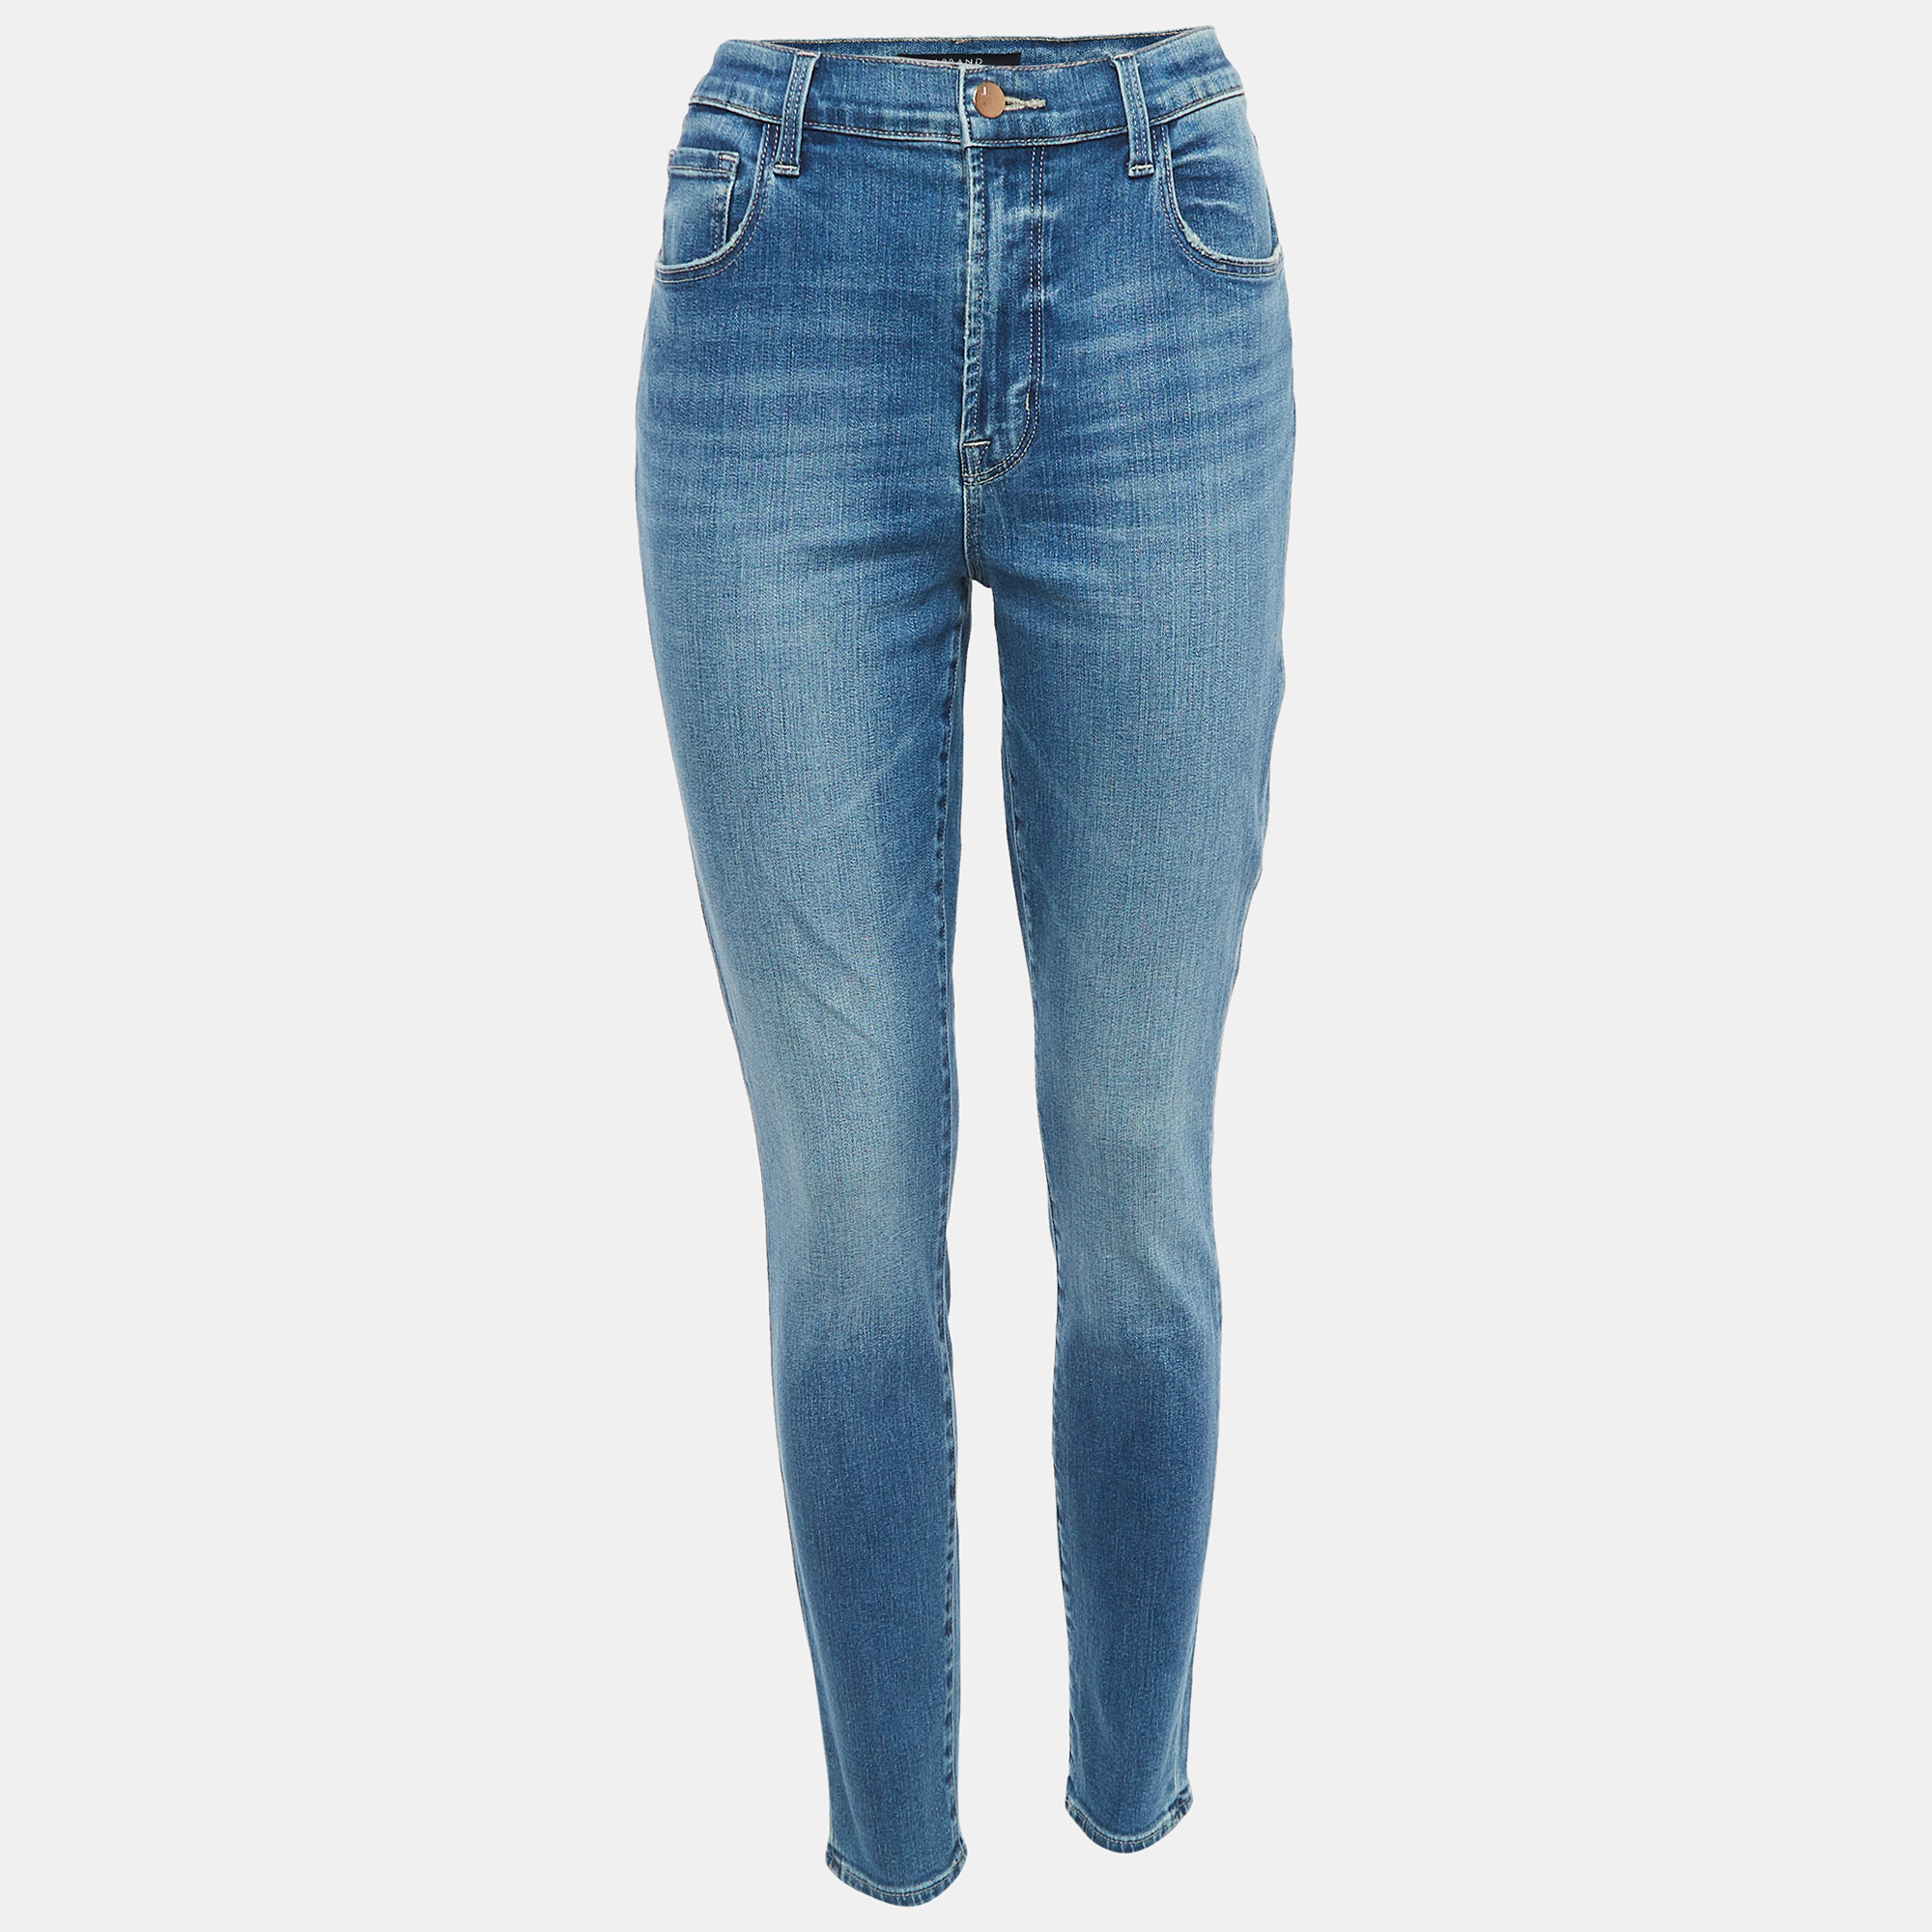 J brand blue washed denim skinny jeans m waist 29"